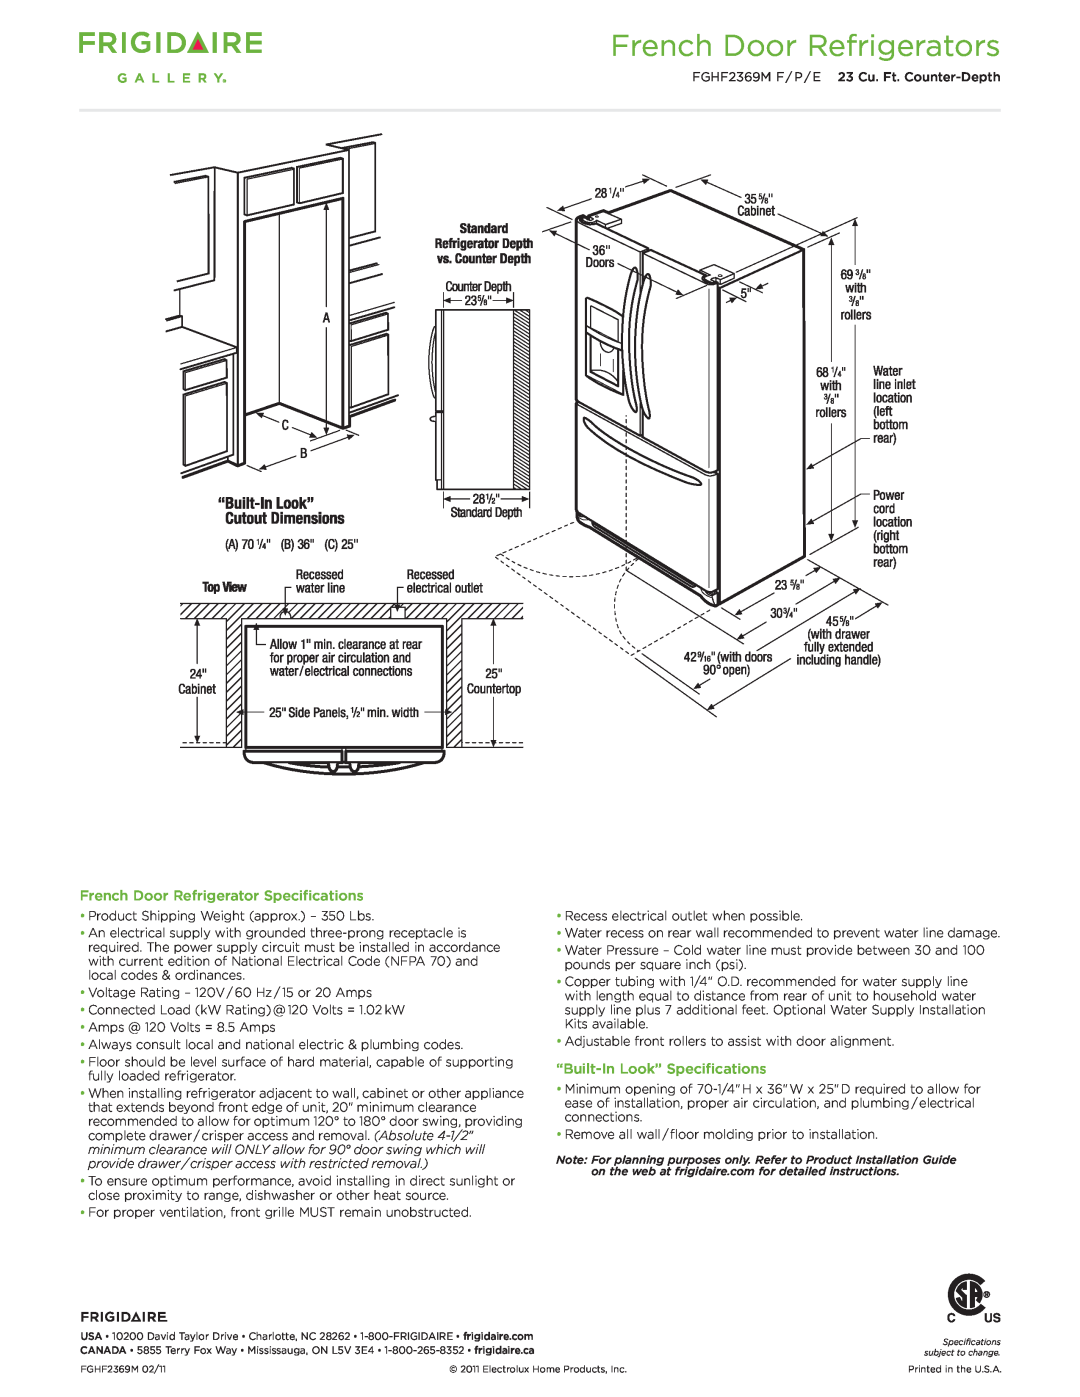 Frigidaire FGHF2369M French Door Refrigerator Specifications, “Built-InLook” Specifications, French Door Refrigerators 